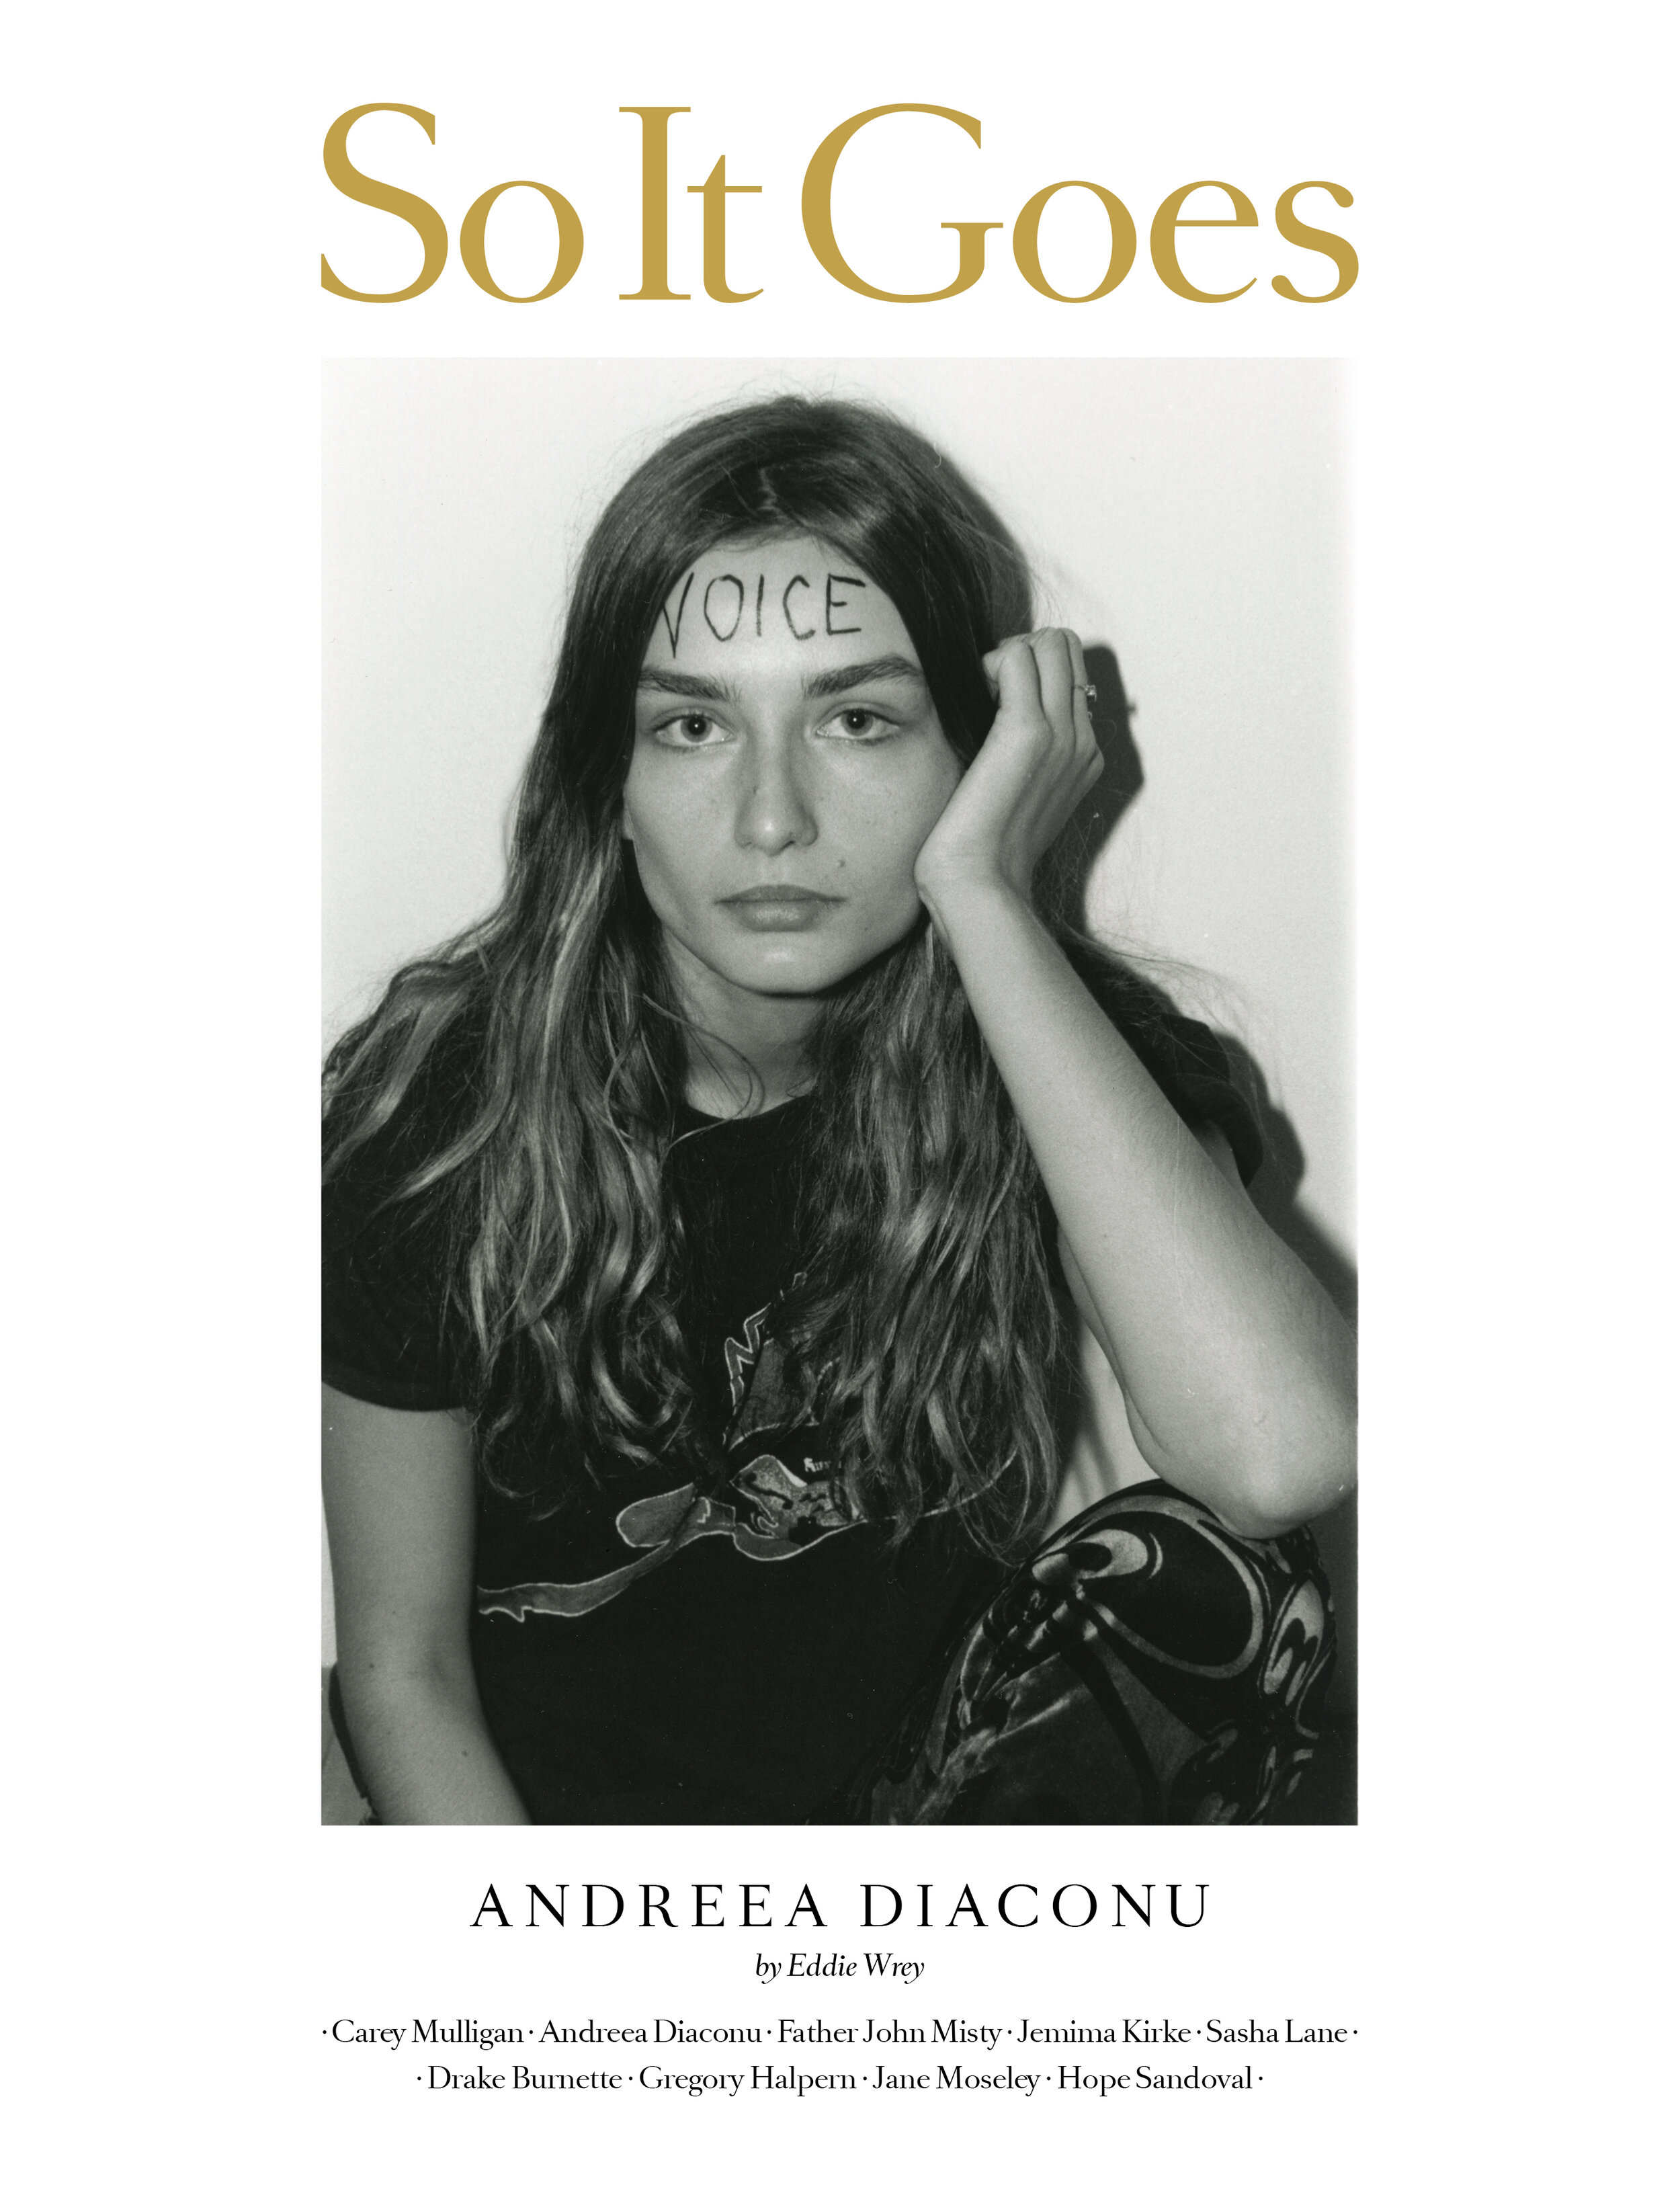 Issue 9_Andreea_Diaconu cover.jpg